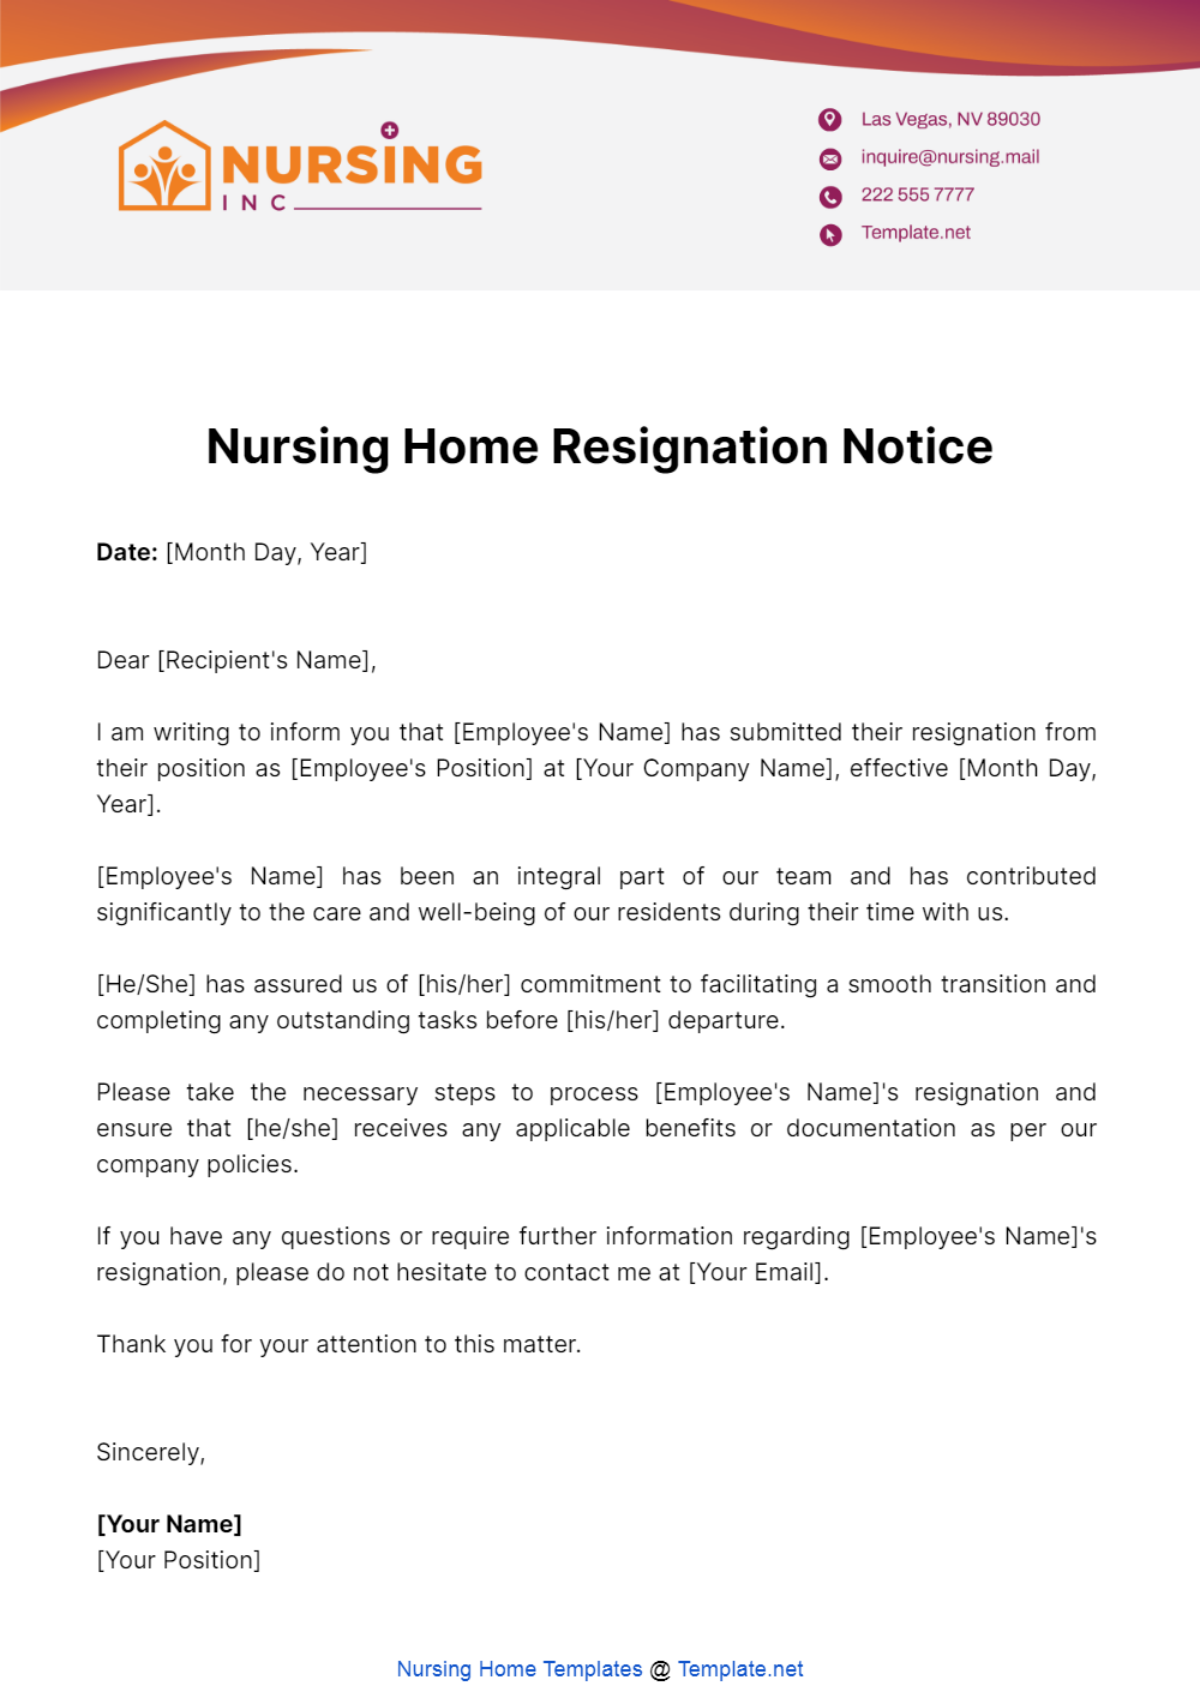 Nursing Home Resignation Notice Template